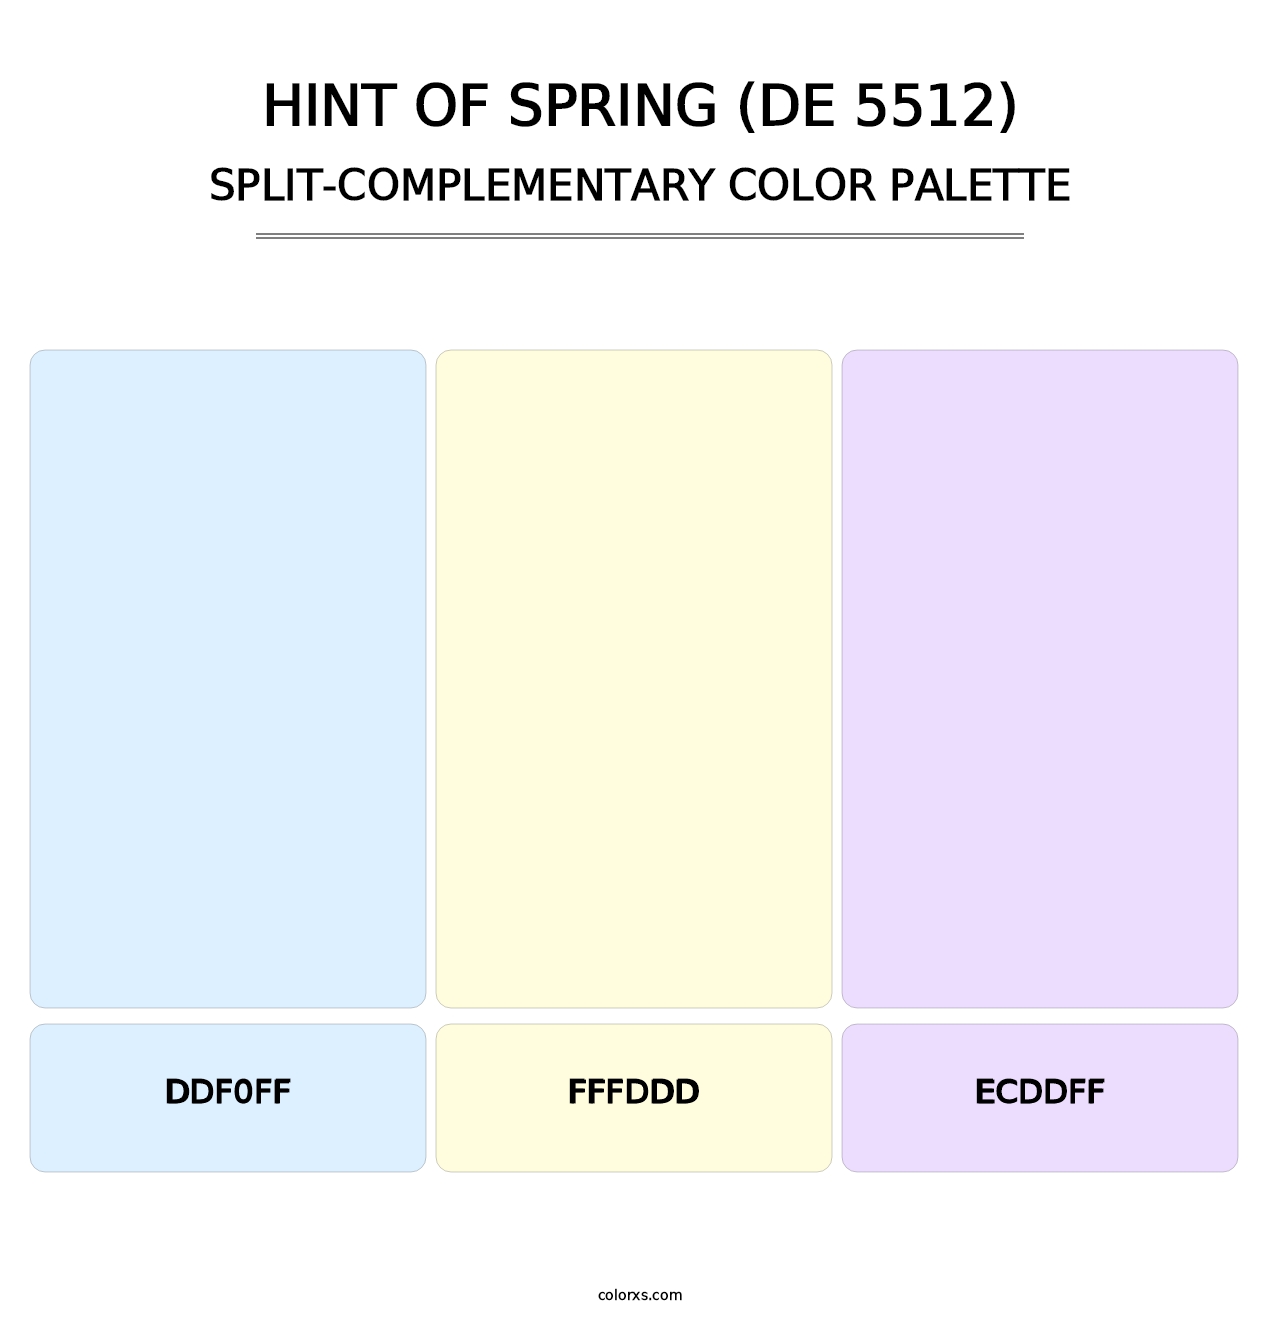 Hint of Spring (DE 5512) - Split-Complementary Color Palette